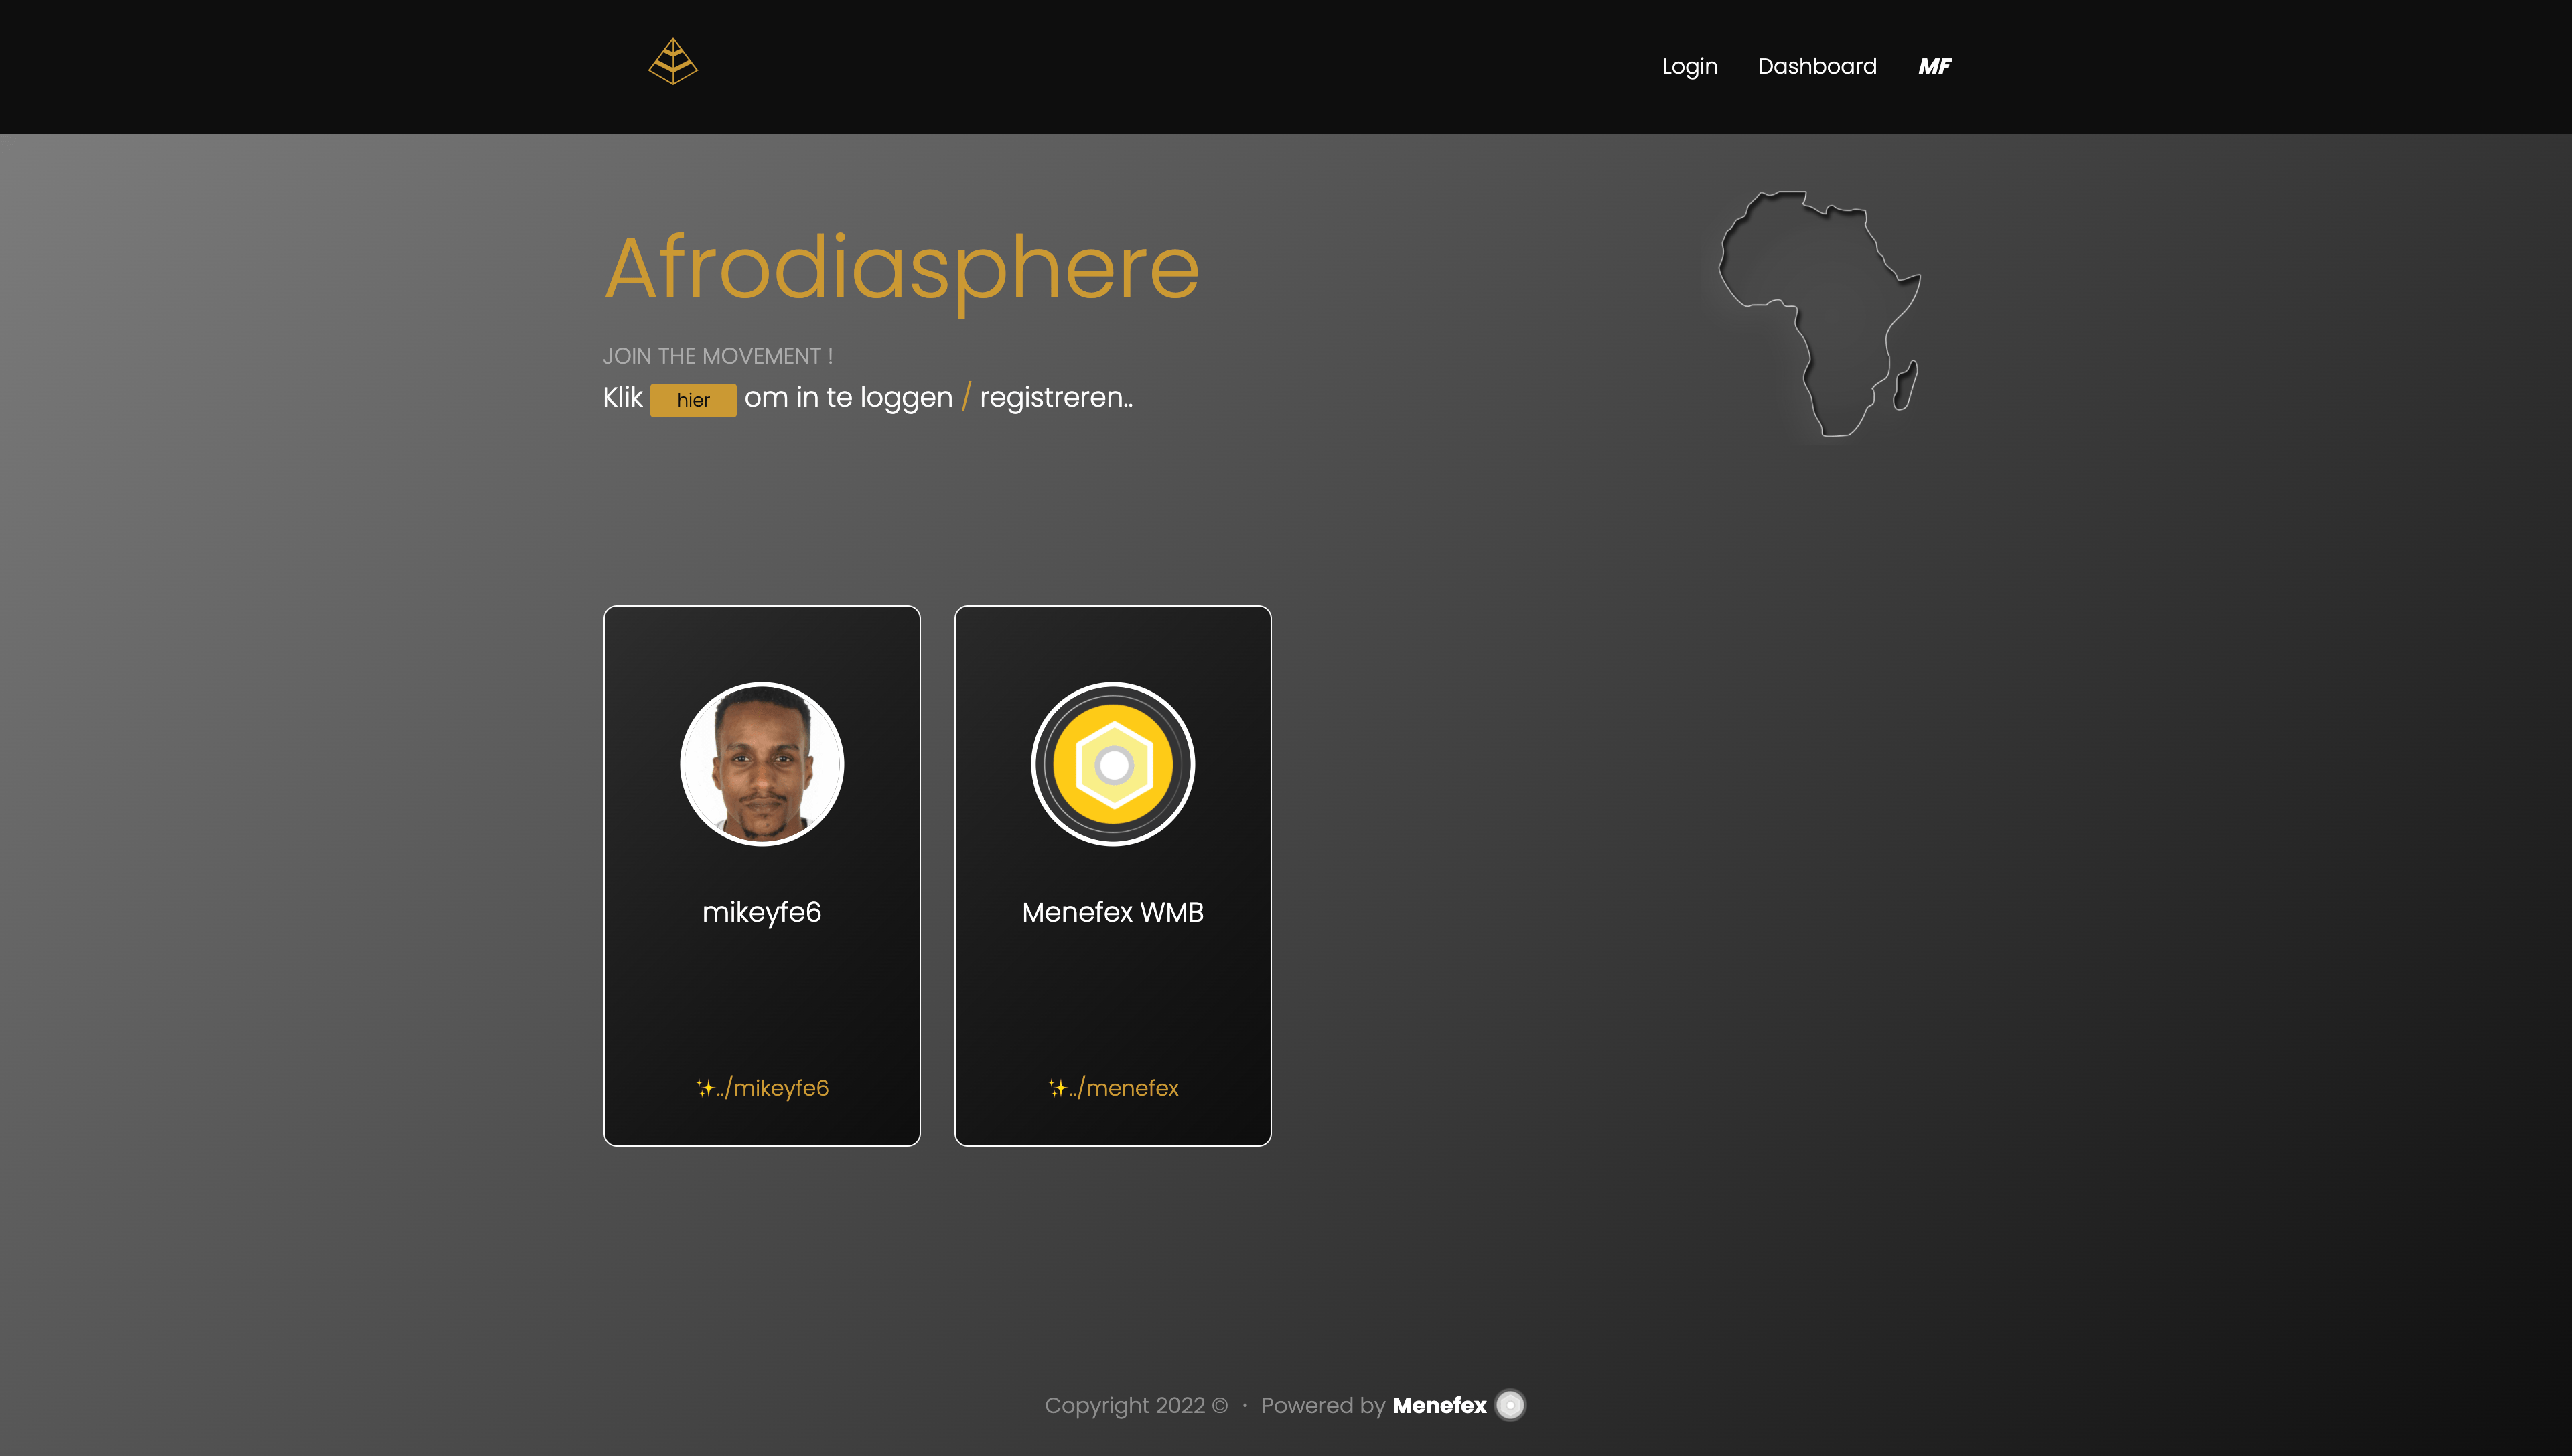 Afrodiasphere